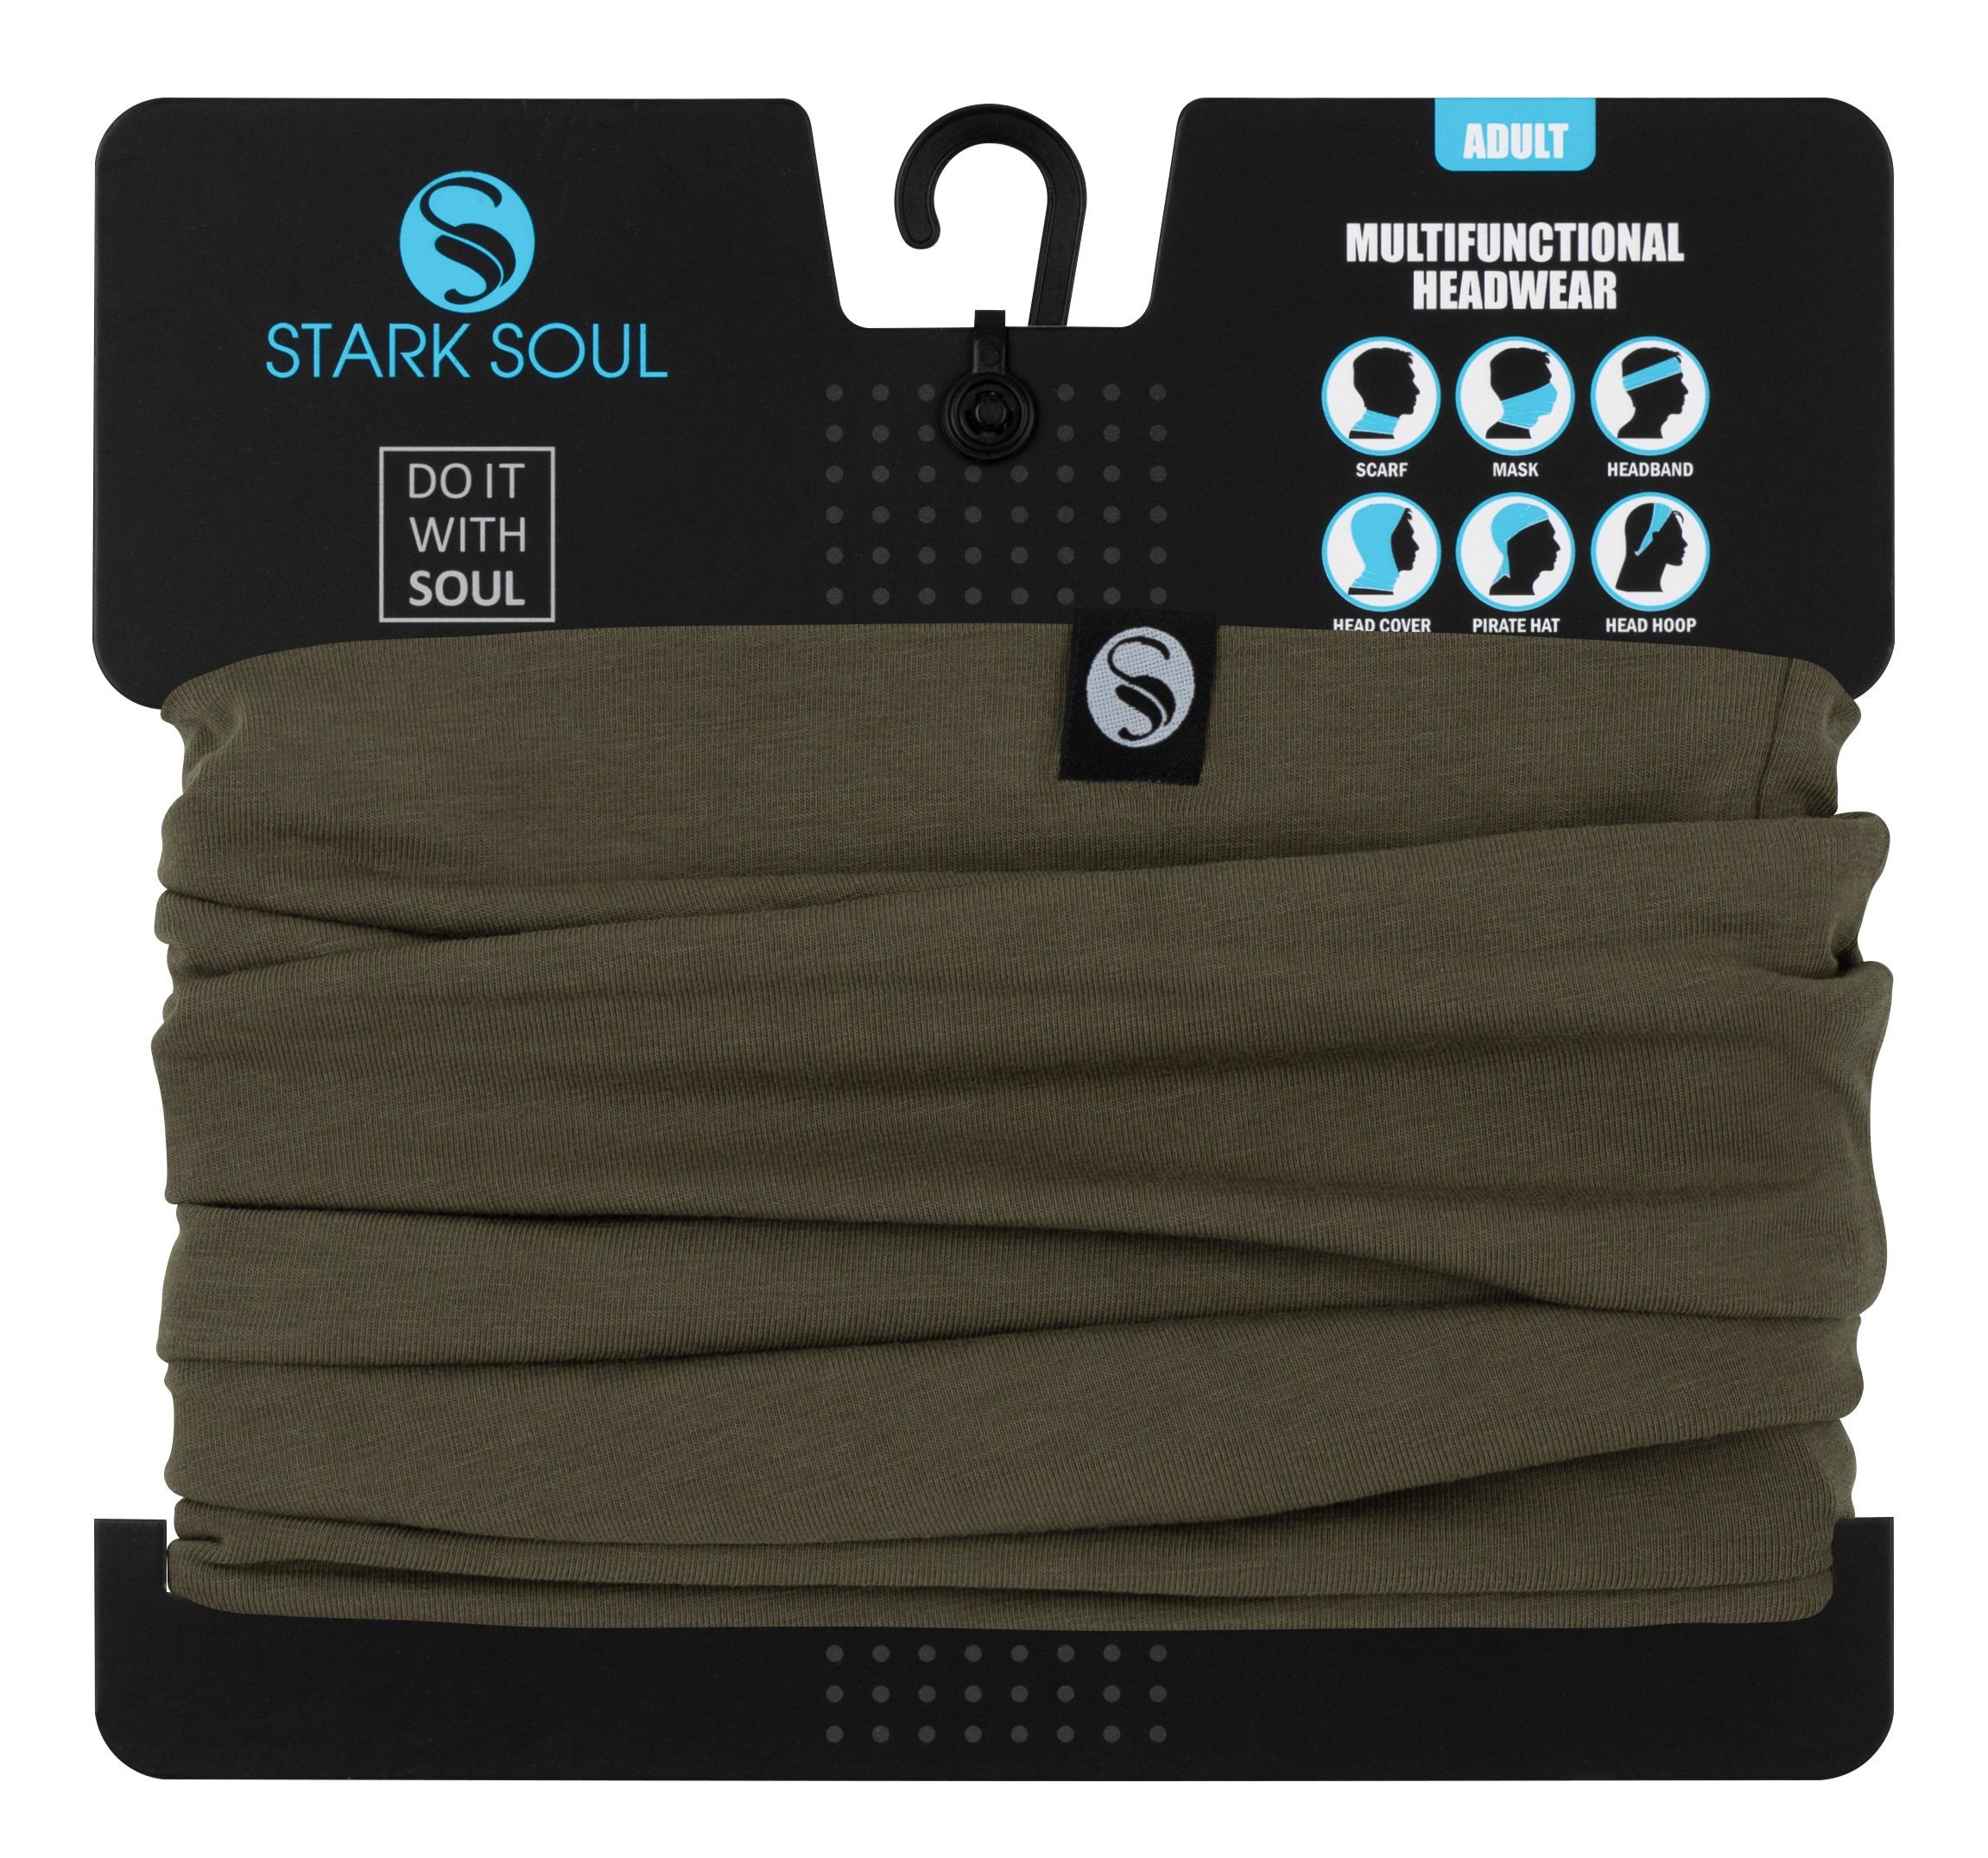 Stark Soul® Multifunktionstuch Unisex, aus angenehmen Khaki Jersey-Material